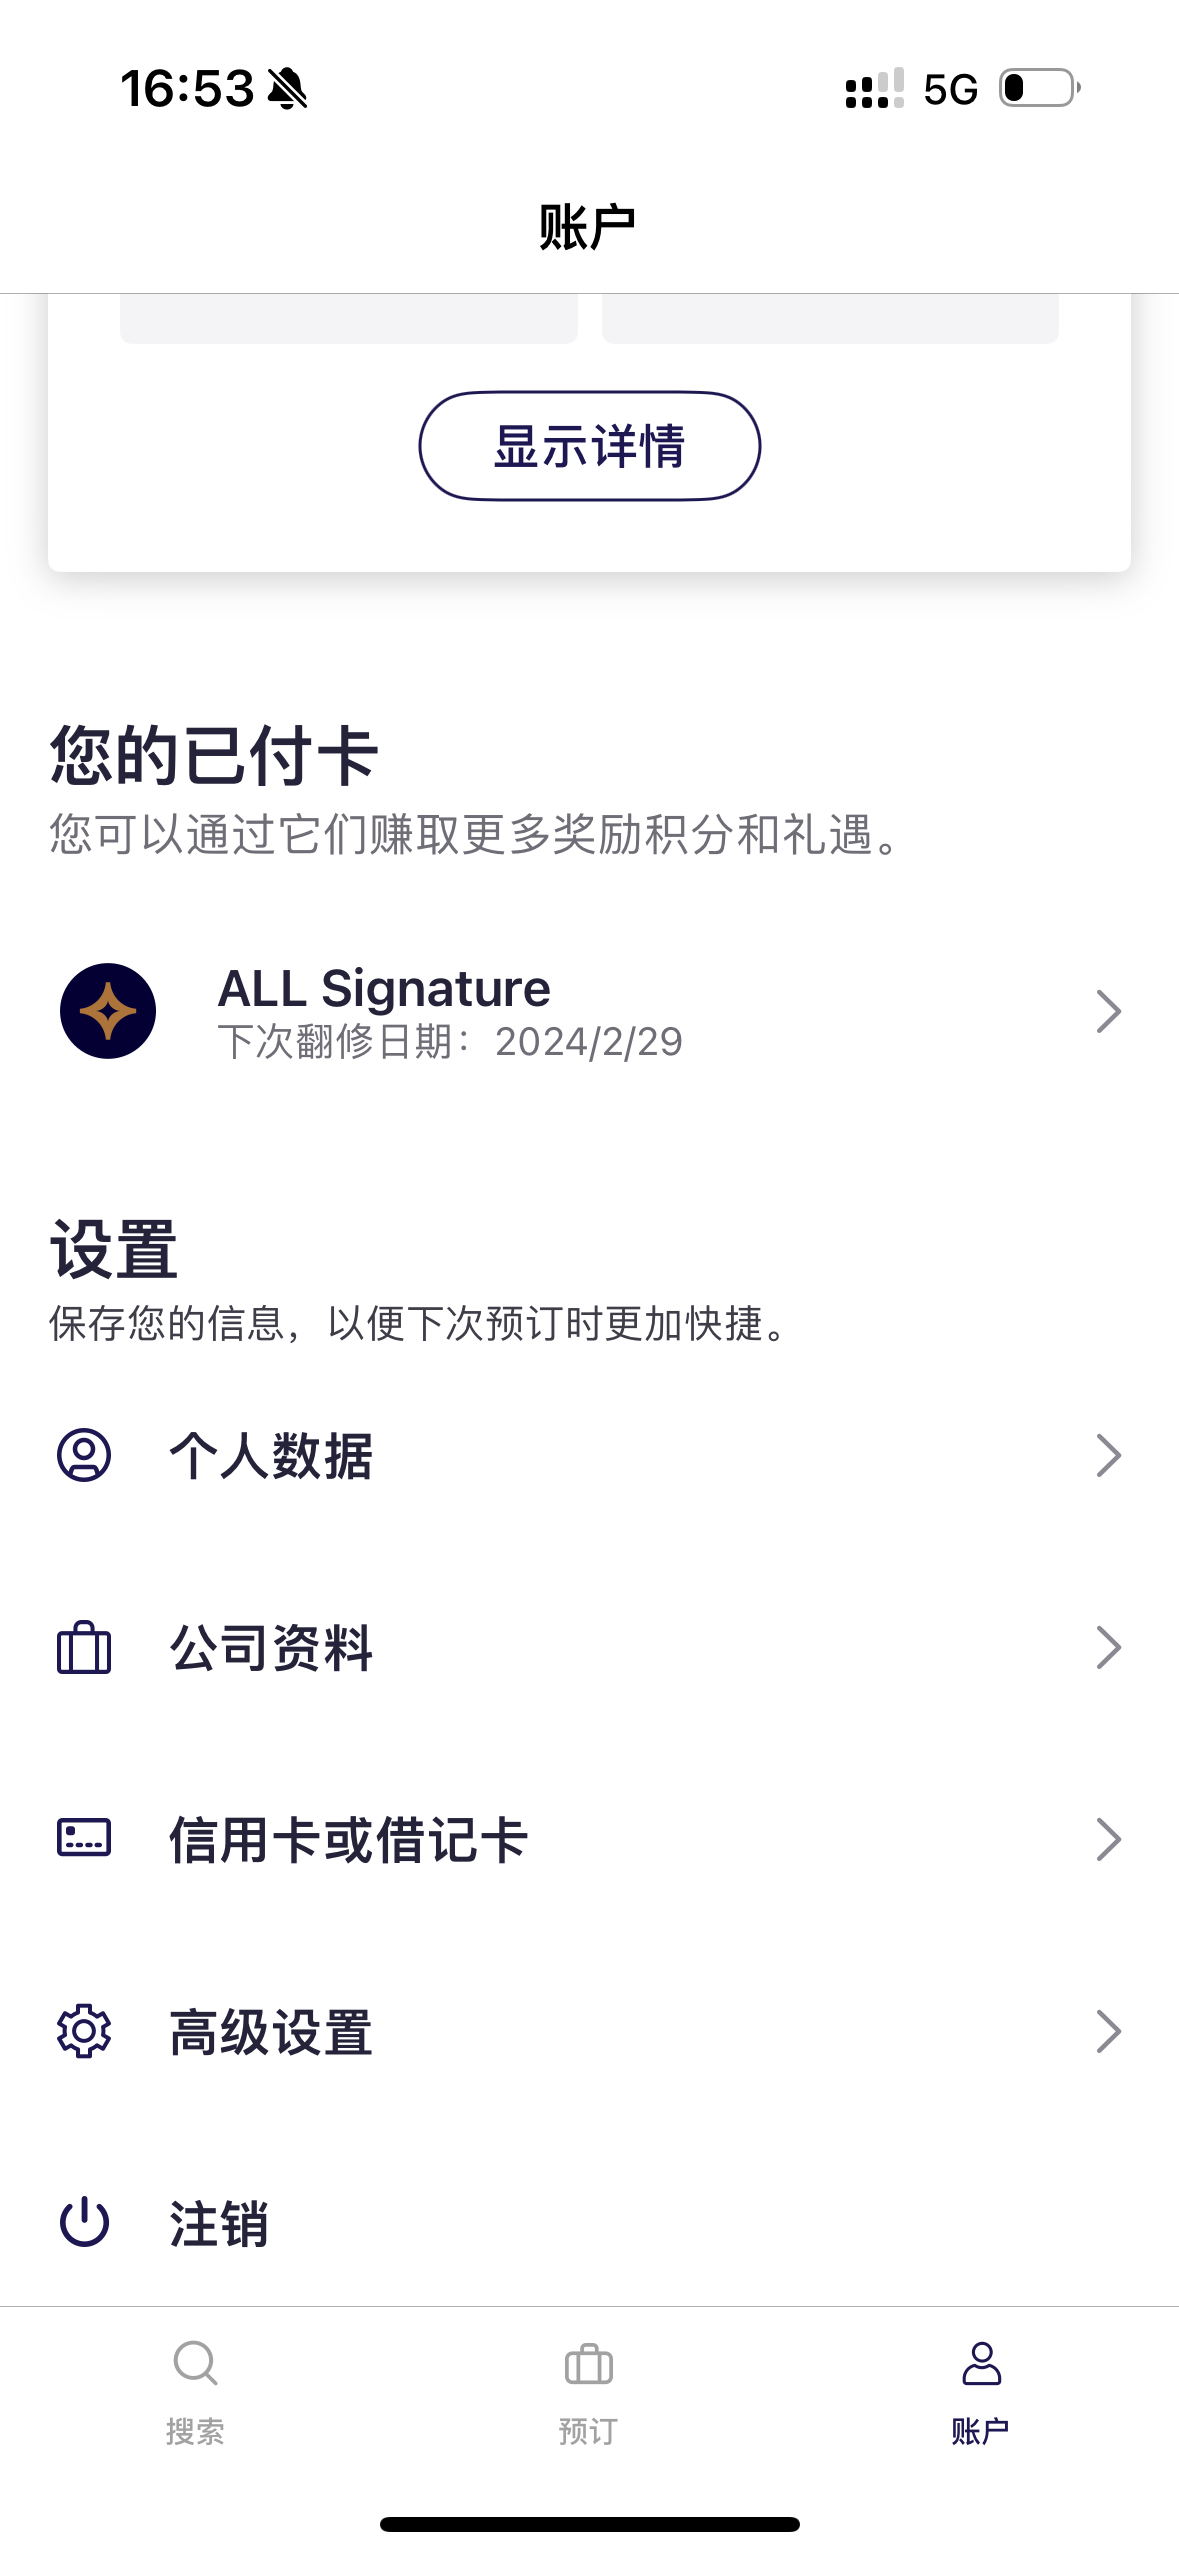 All Signature ҪCPF